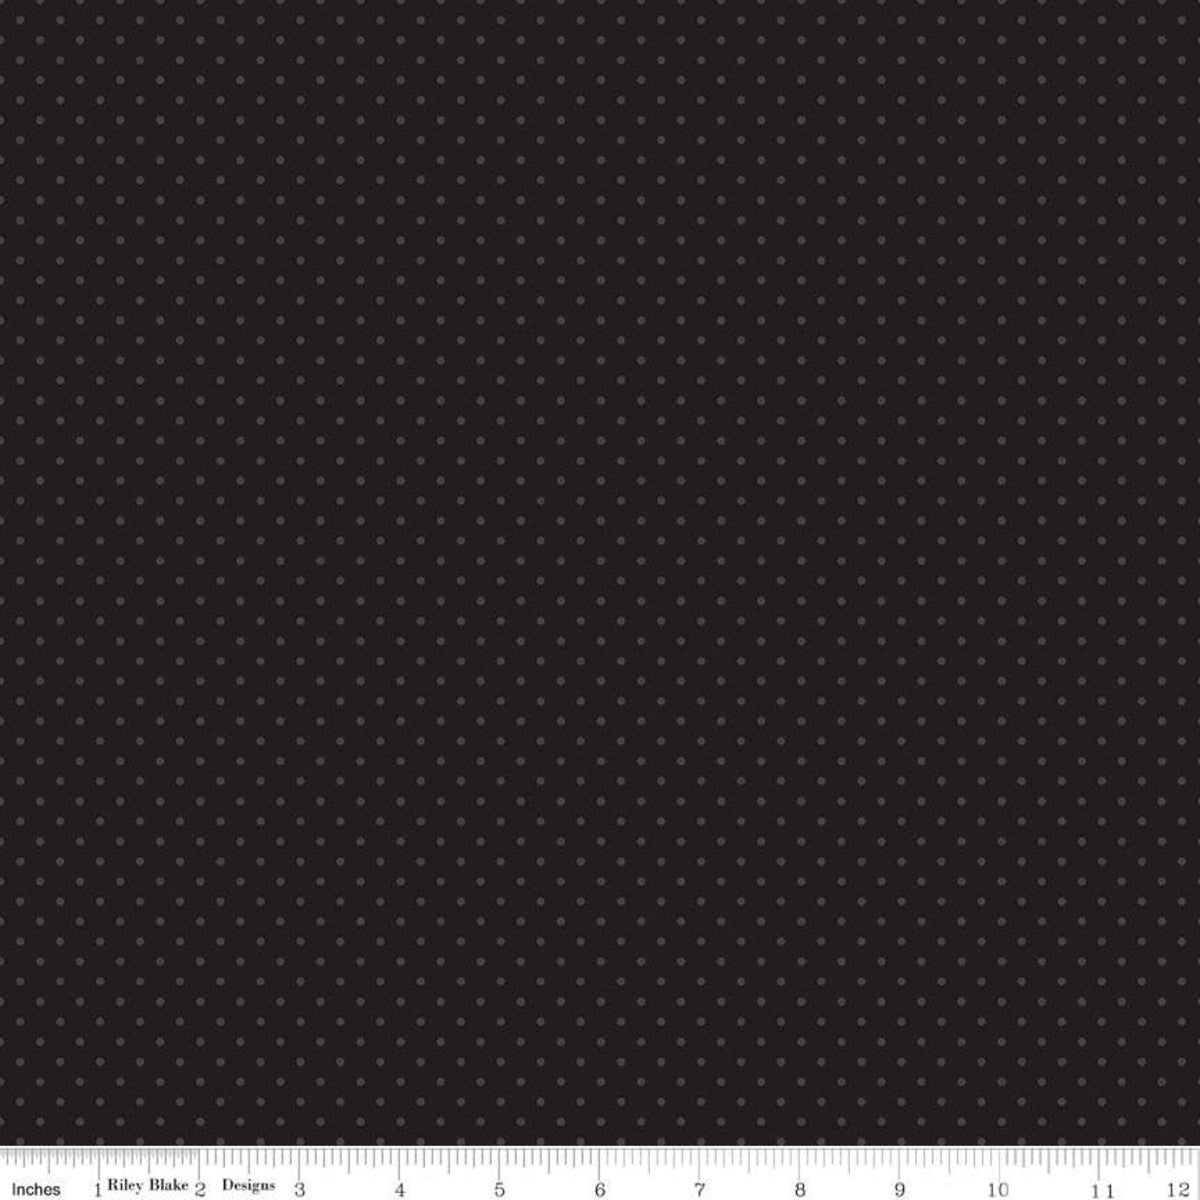 Black Tone Swiss Polka Dots - Black Background Fabric, 100% Cotton, Ref. C790-110 BLACK, Black Tone on Tone Collection by Riley Blake Designs®